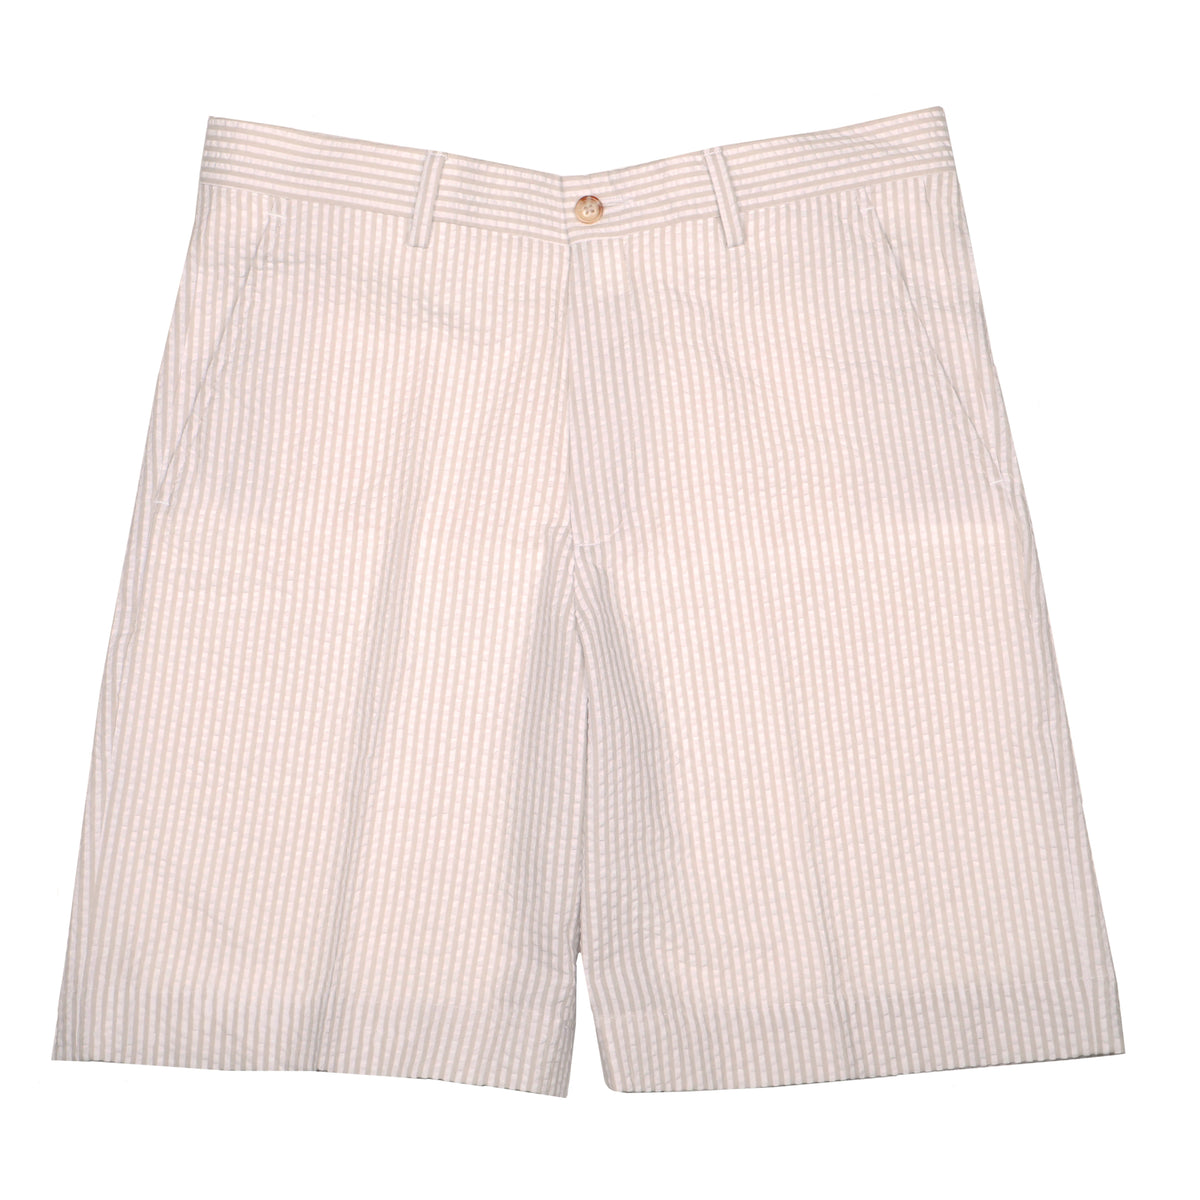 Rampart Khaki &amp; White Seersucker Shorts